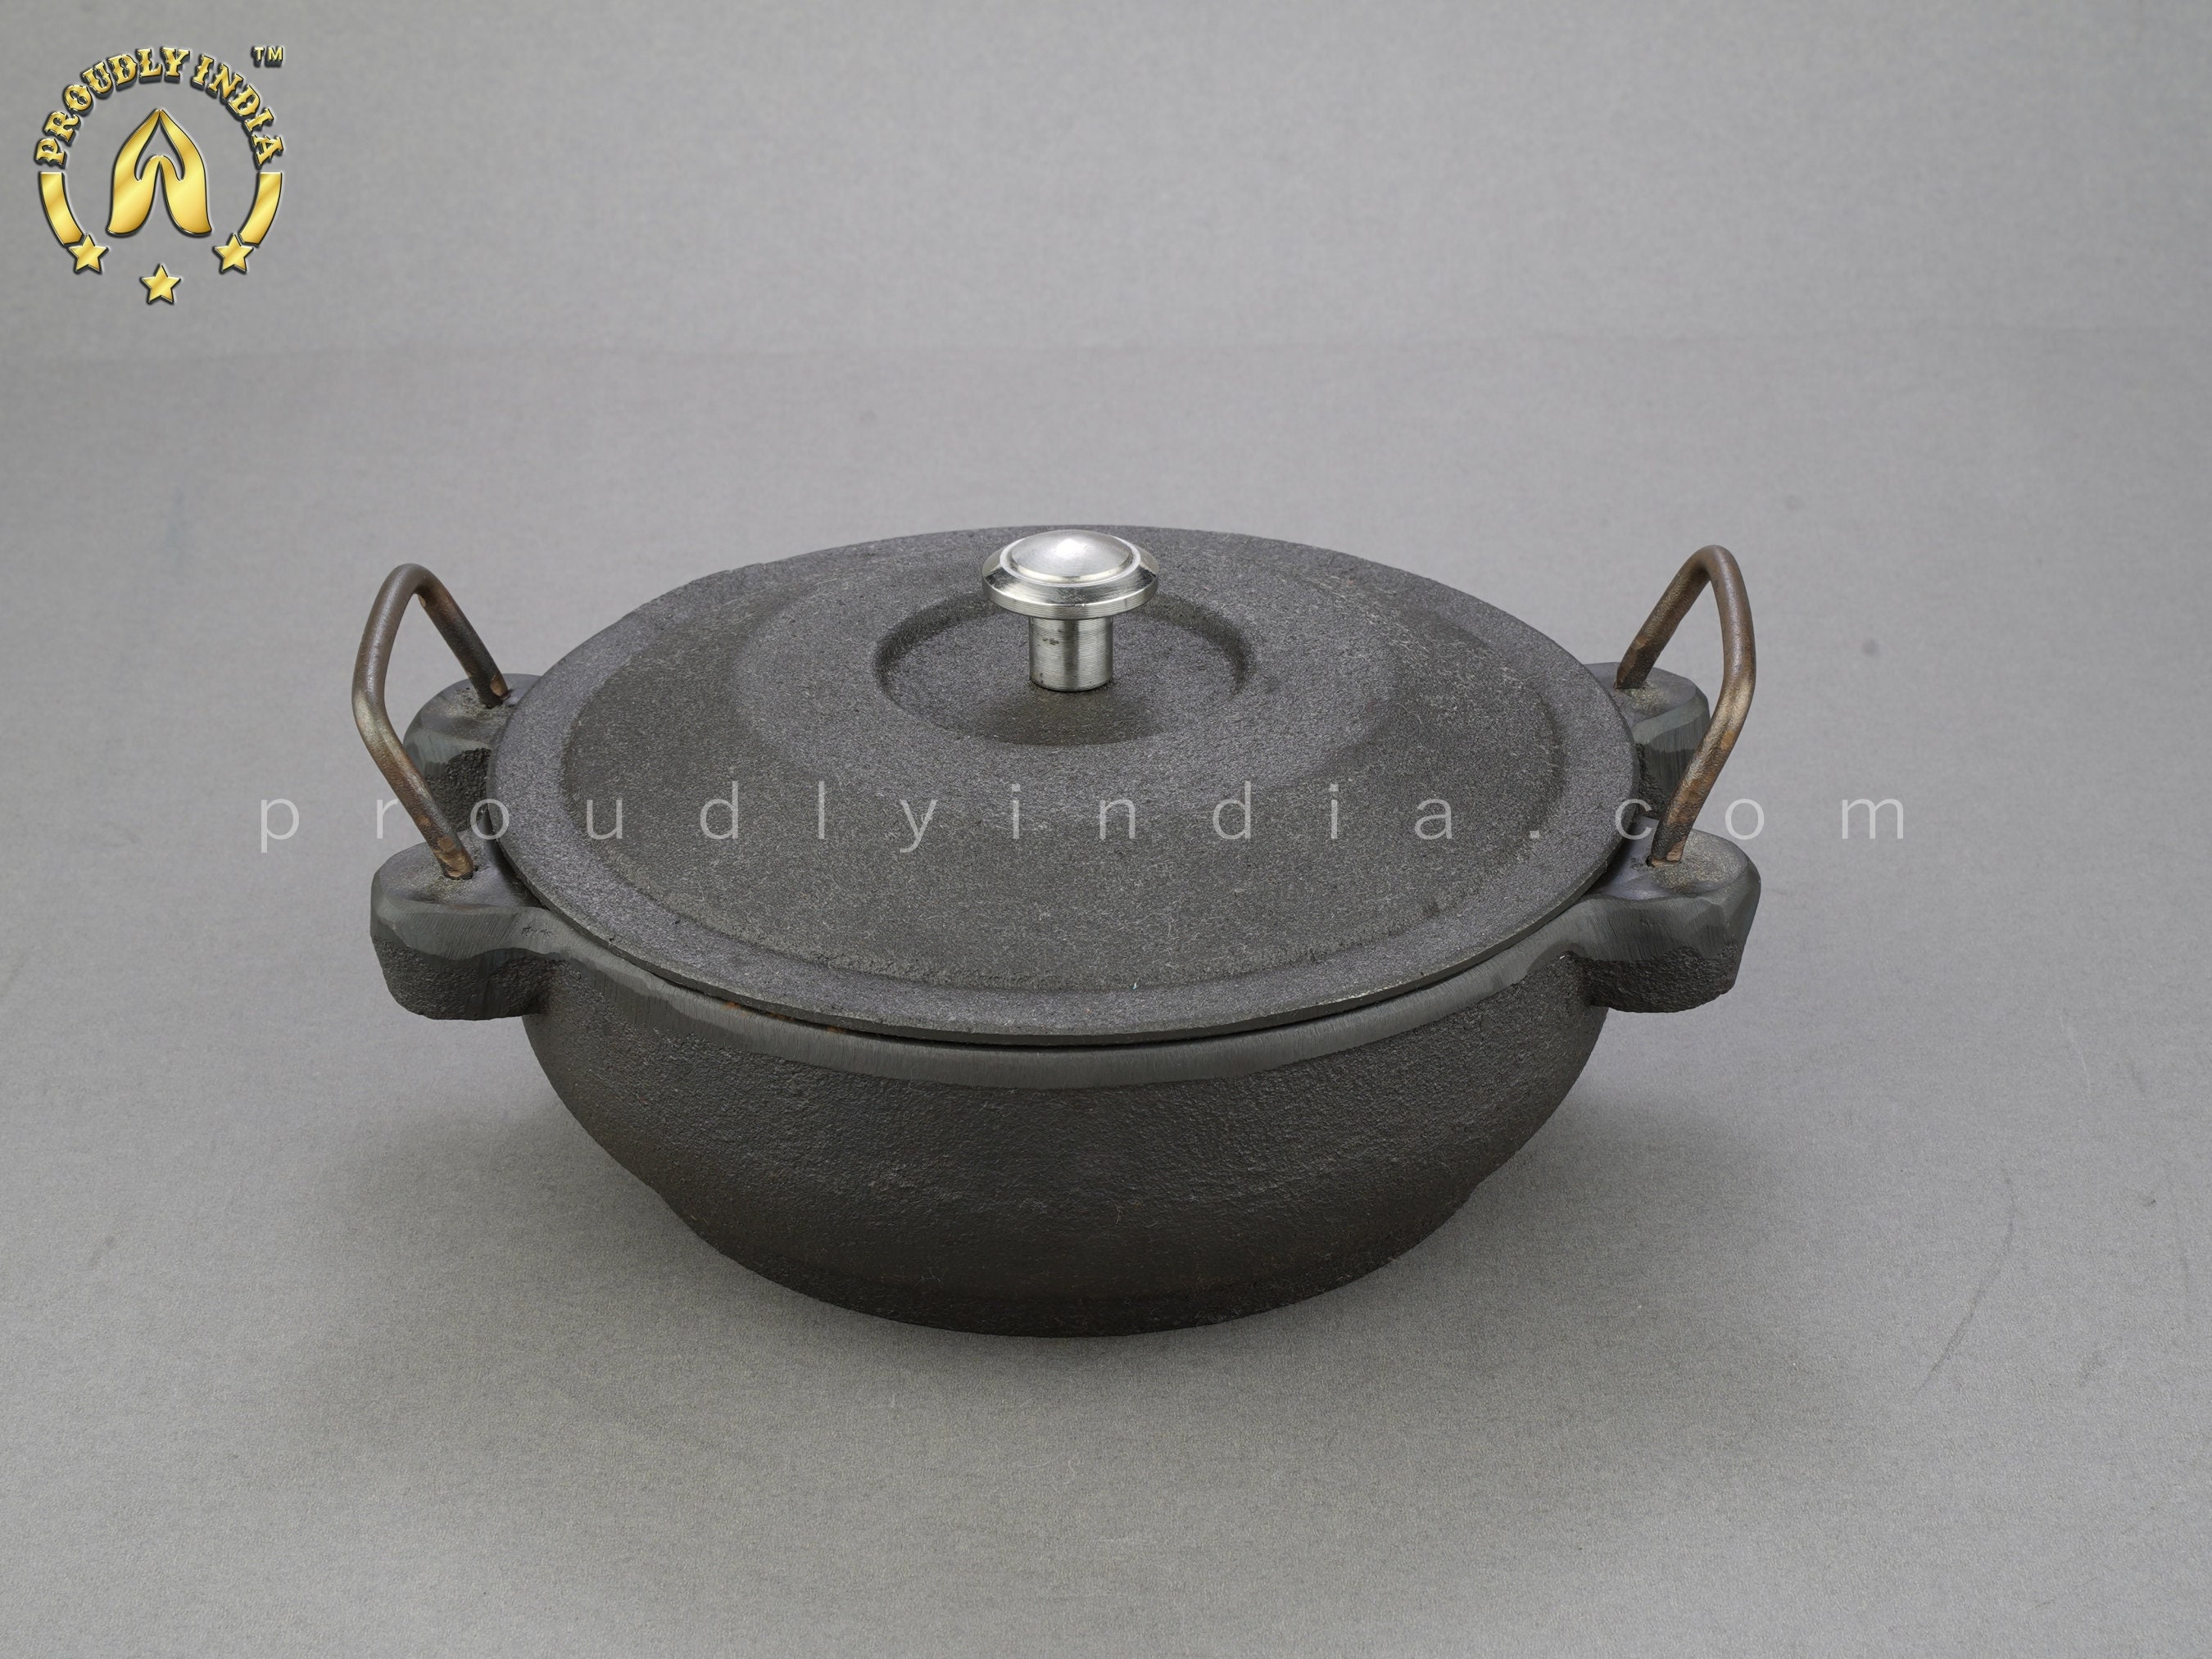 Small Kadai (8 Inches) - Premium Cast Iron - Cookware - Nallah